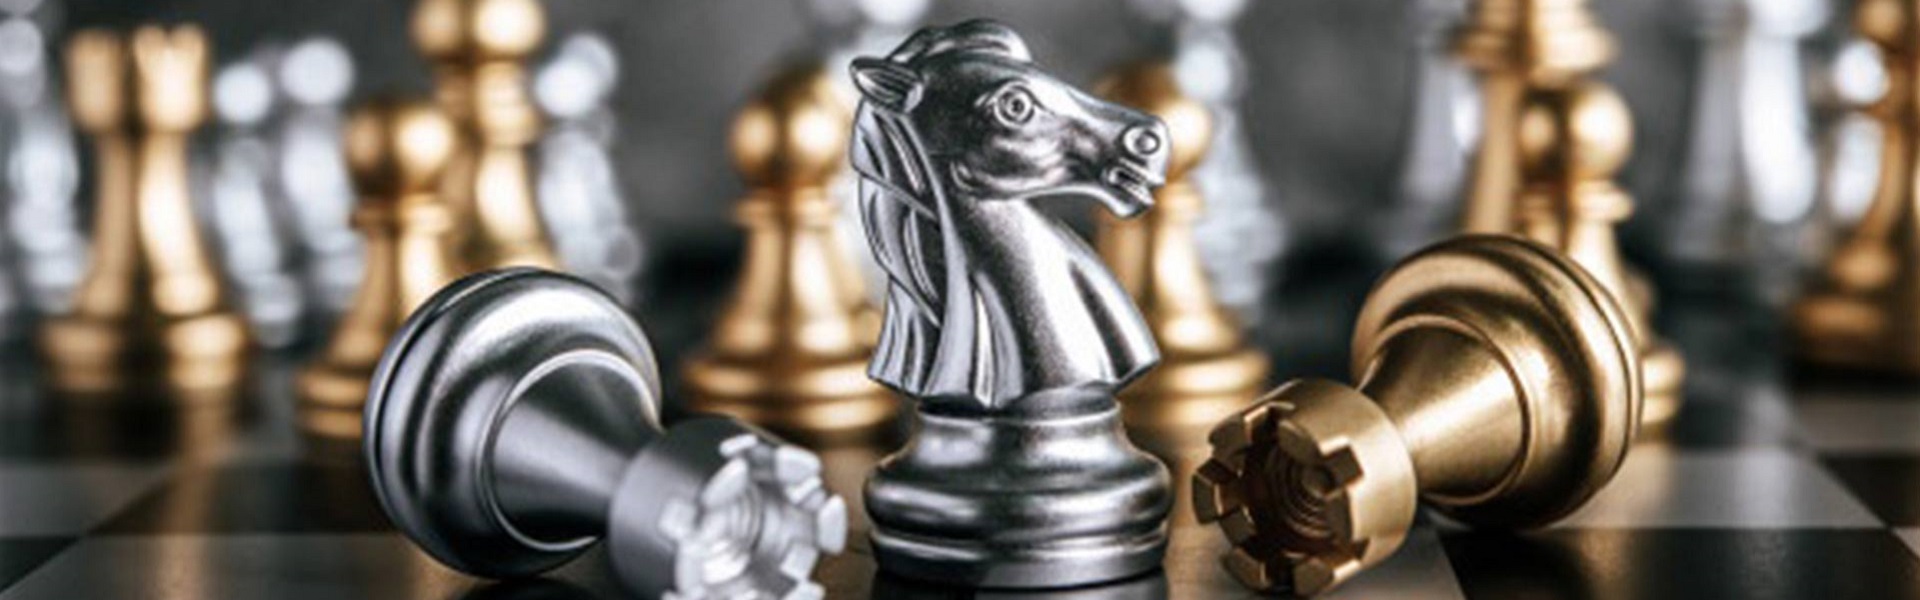 Royal Car Rental Group | Royal Car Rental Group |  Chess lessons Dubai & New York